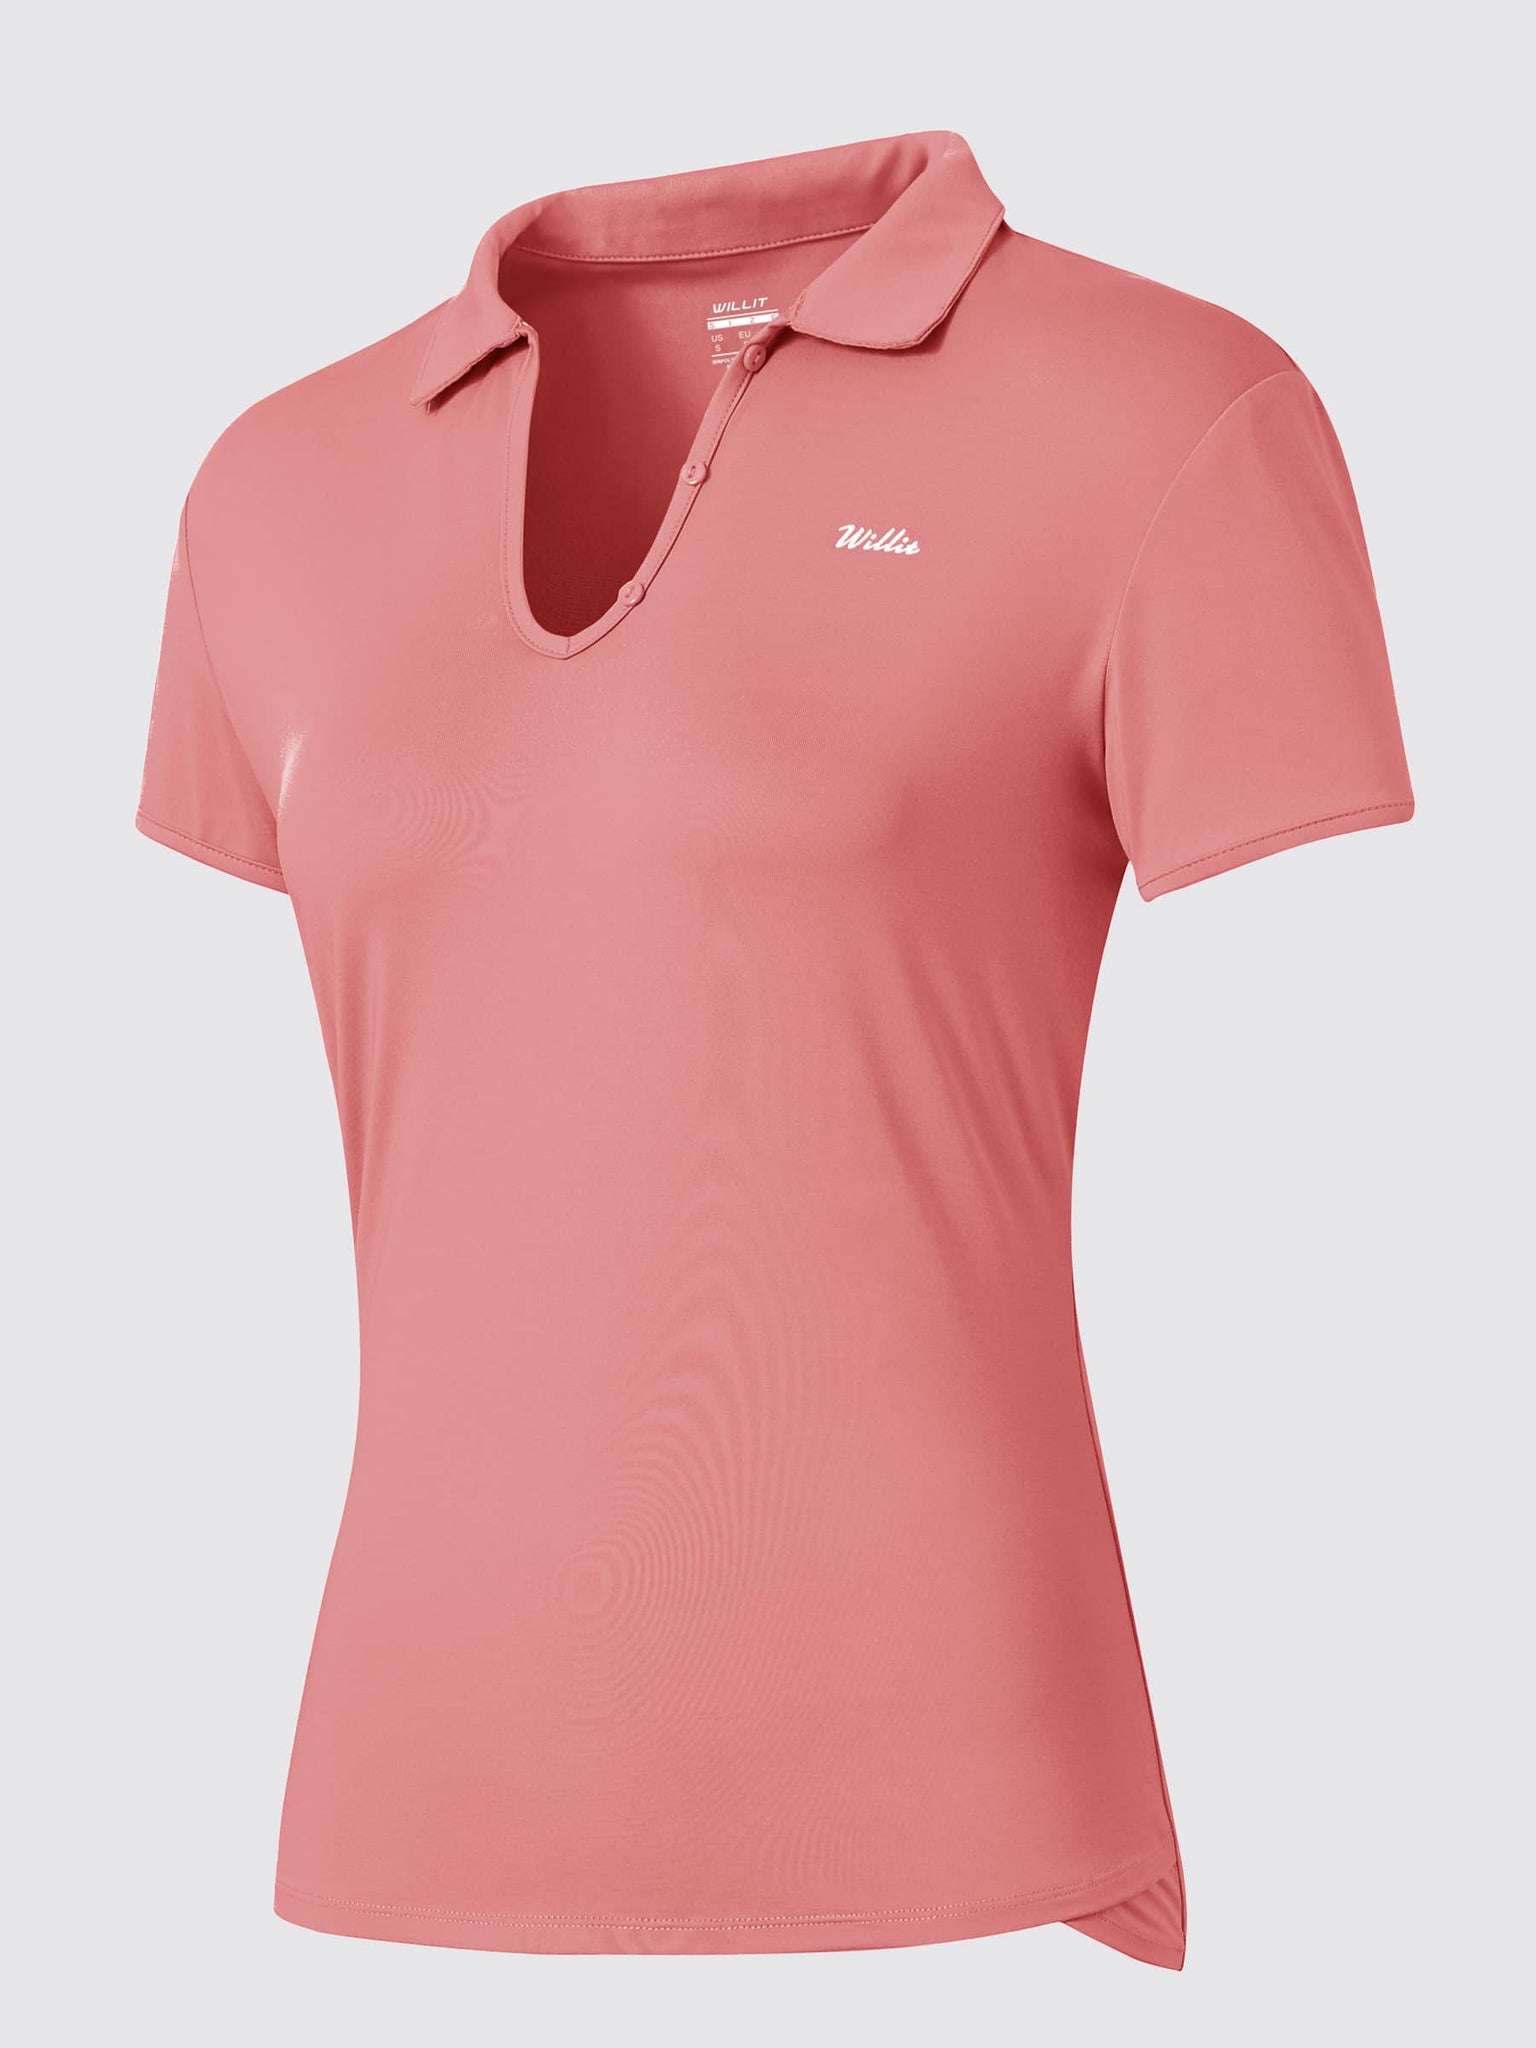 Willit Women's Golf Polo Short Sleeve Shirts_Salmon2